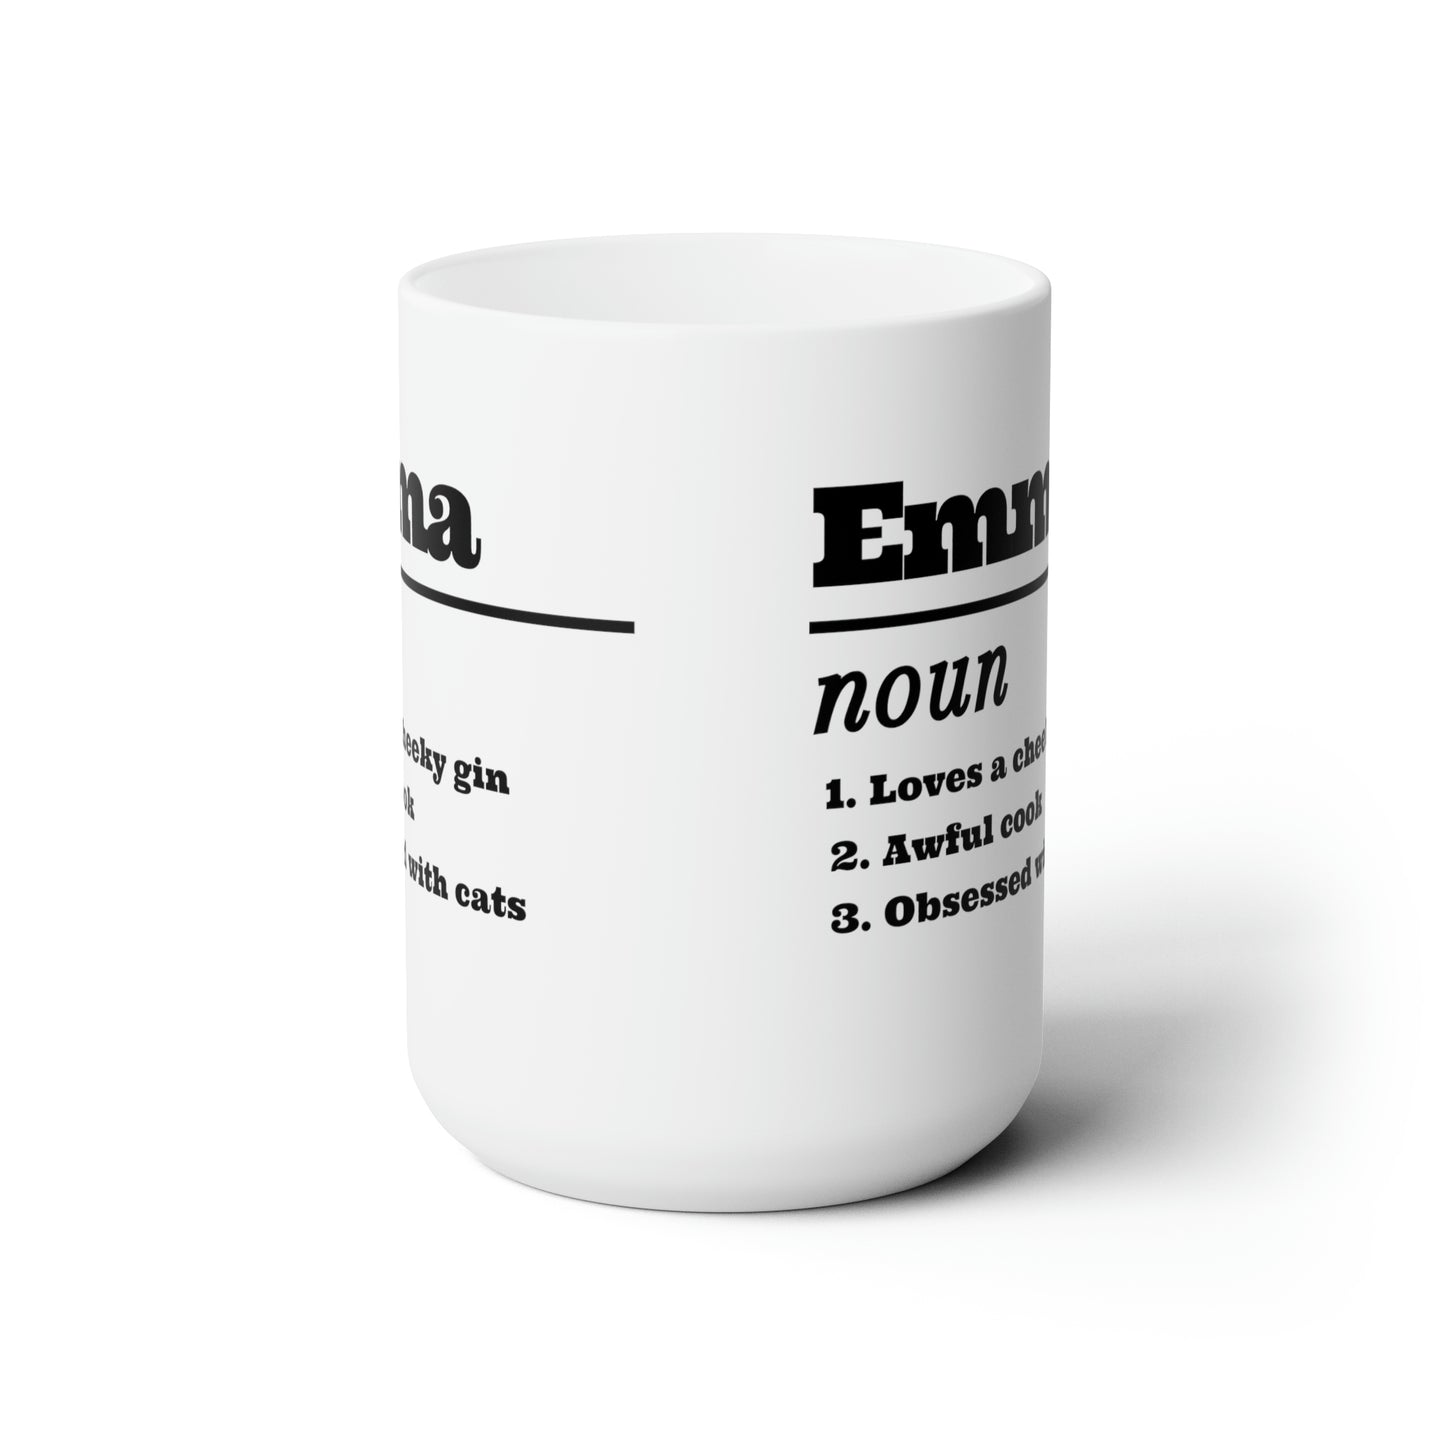 Customise Name Birthday Ceramic Mug 15oz